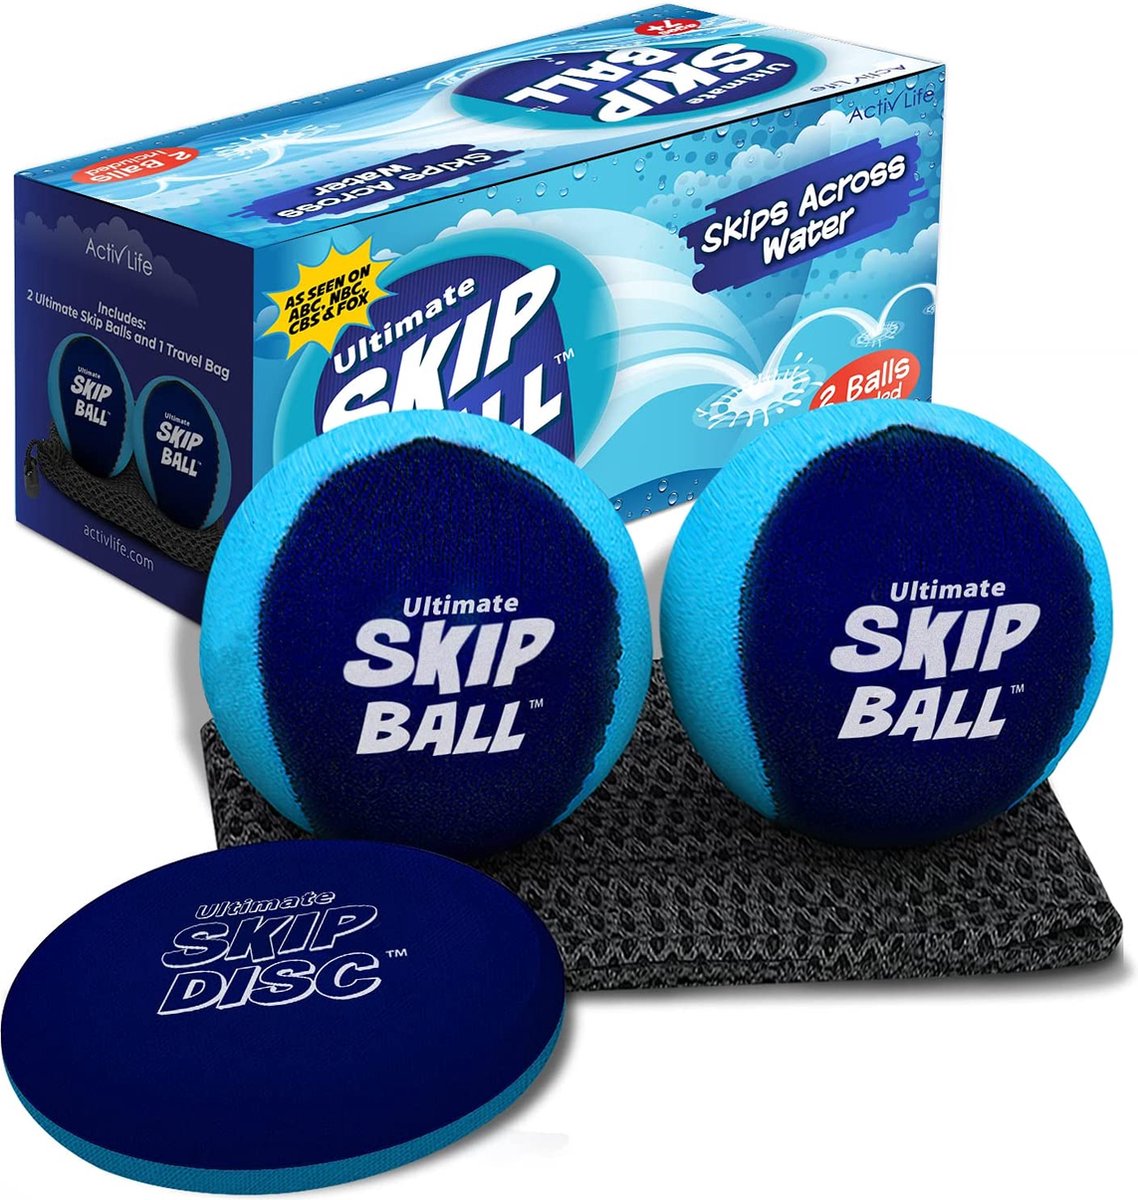 The Ultimate Skip Ball - Water Bouncing Ball (Lot de 2 + Disque